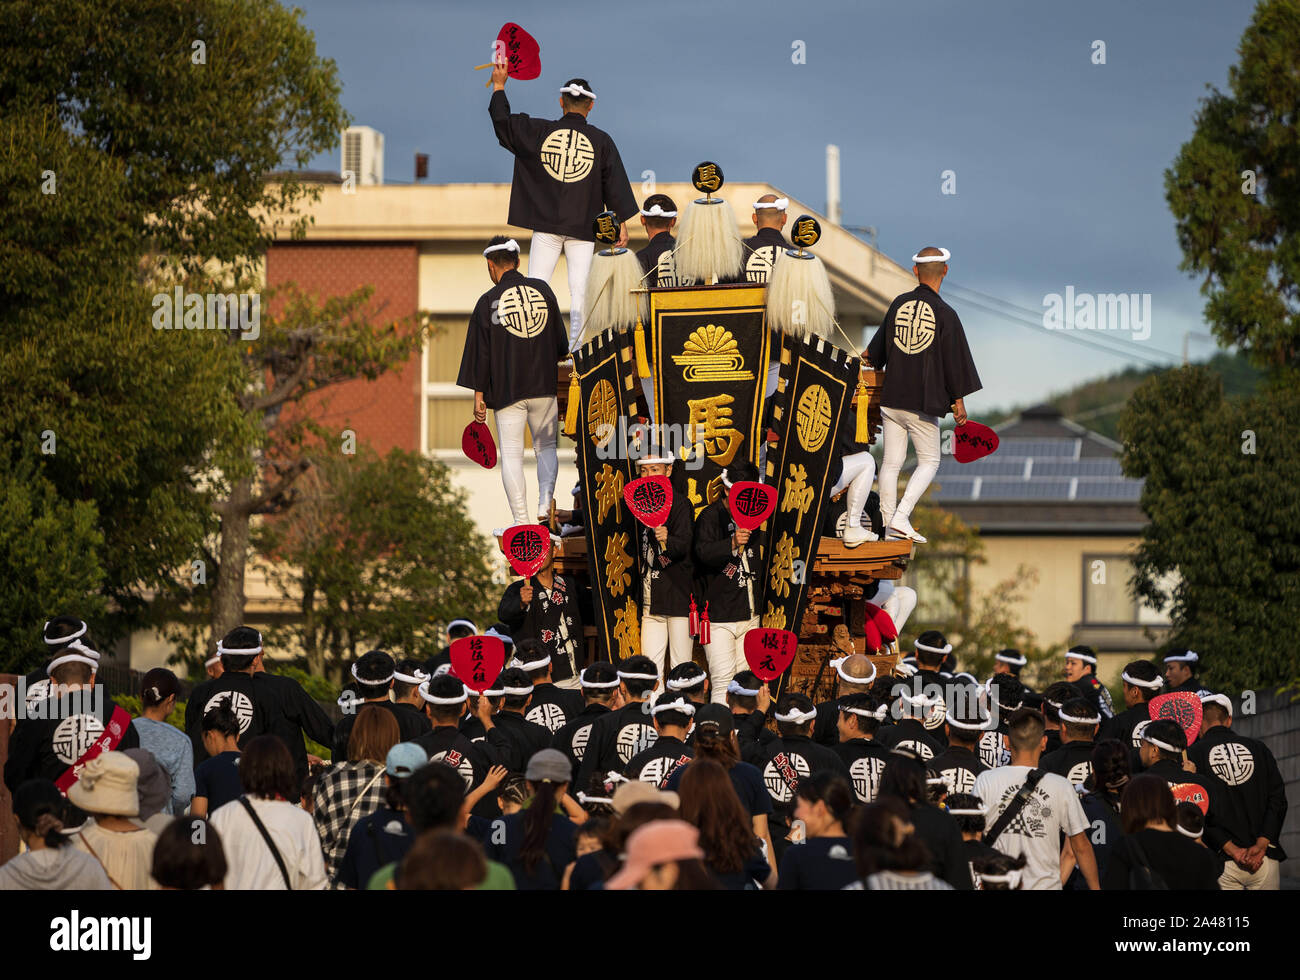 Local leaders atop wooden cart amid crowd at Japanese danjiri festival Stock Photo